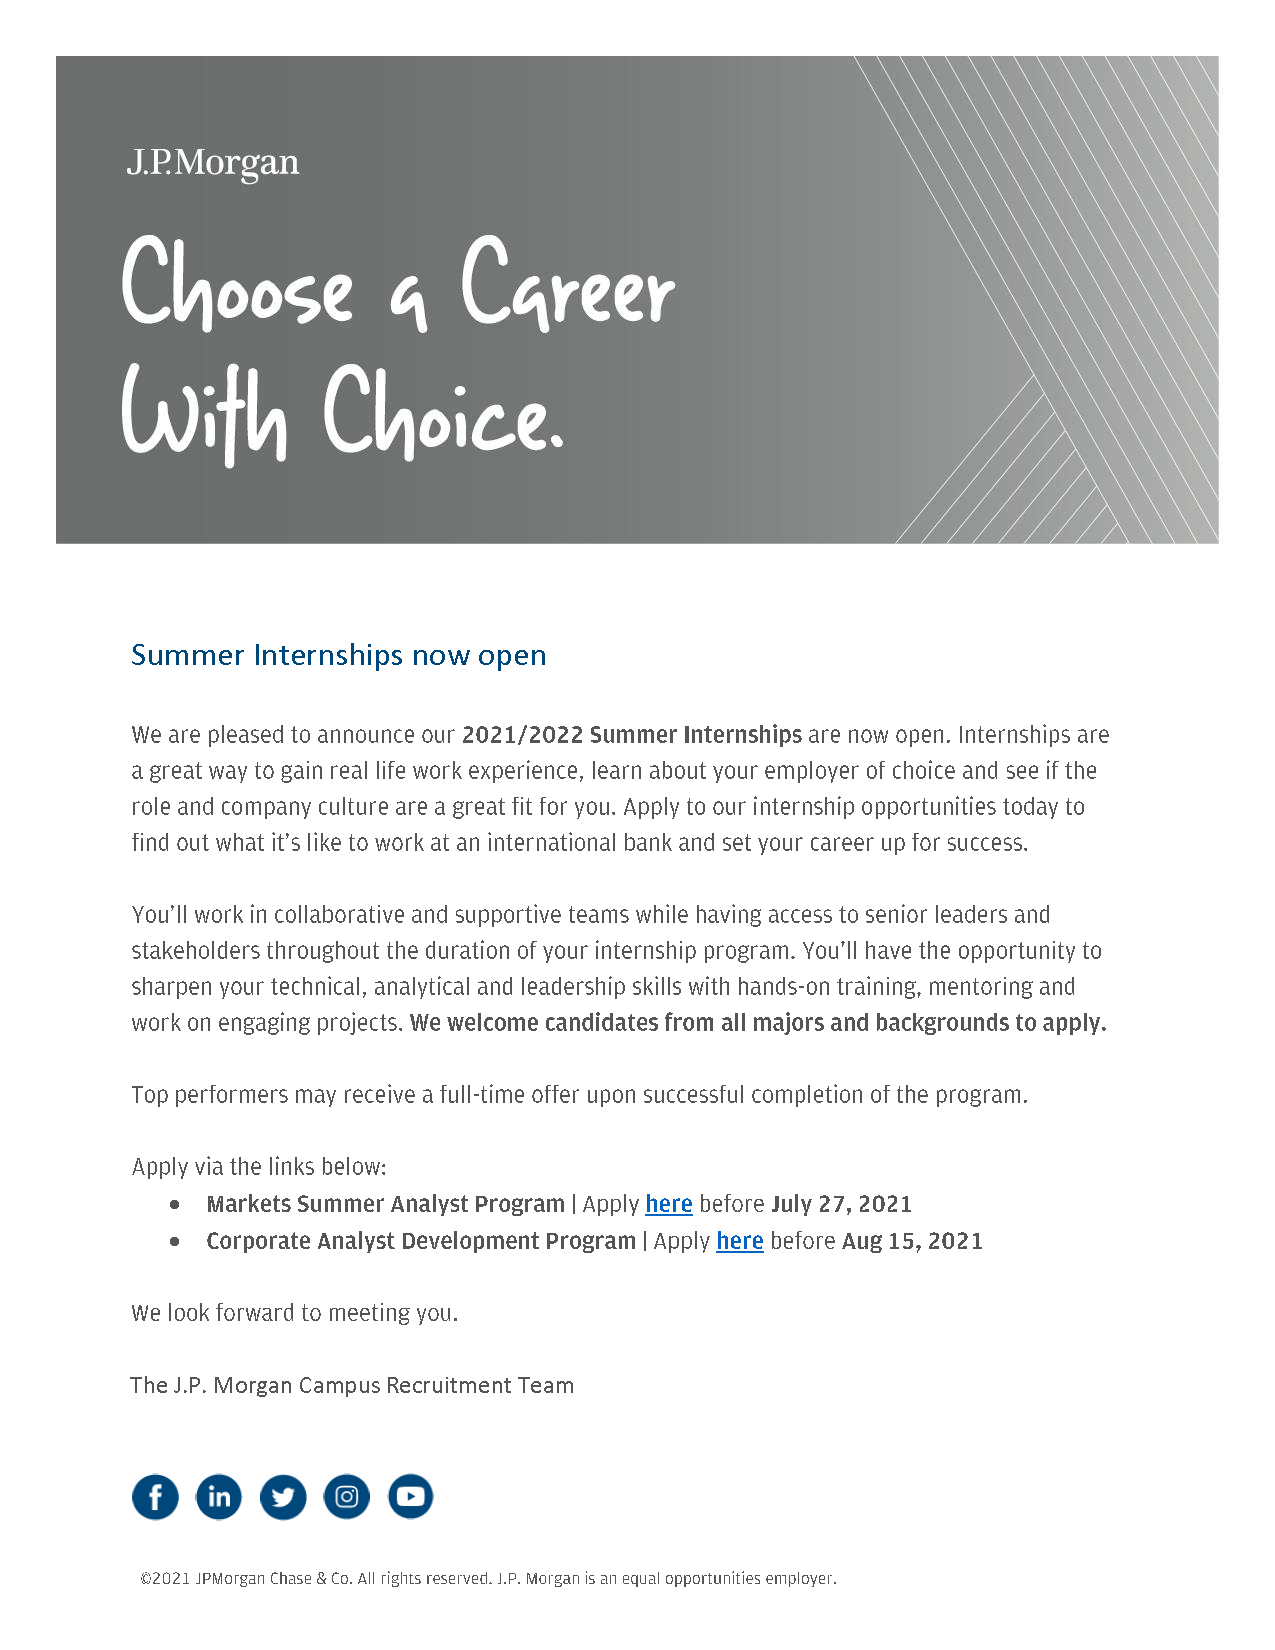 J.P. 2021/2022 Summer Internships applications open, apply now!